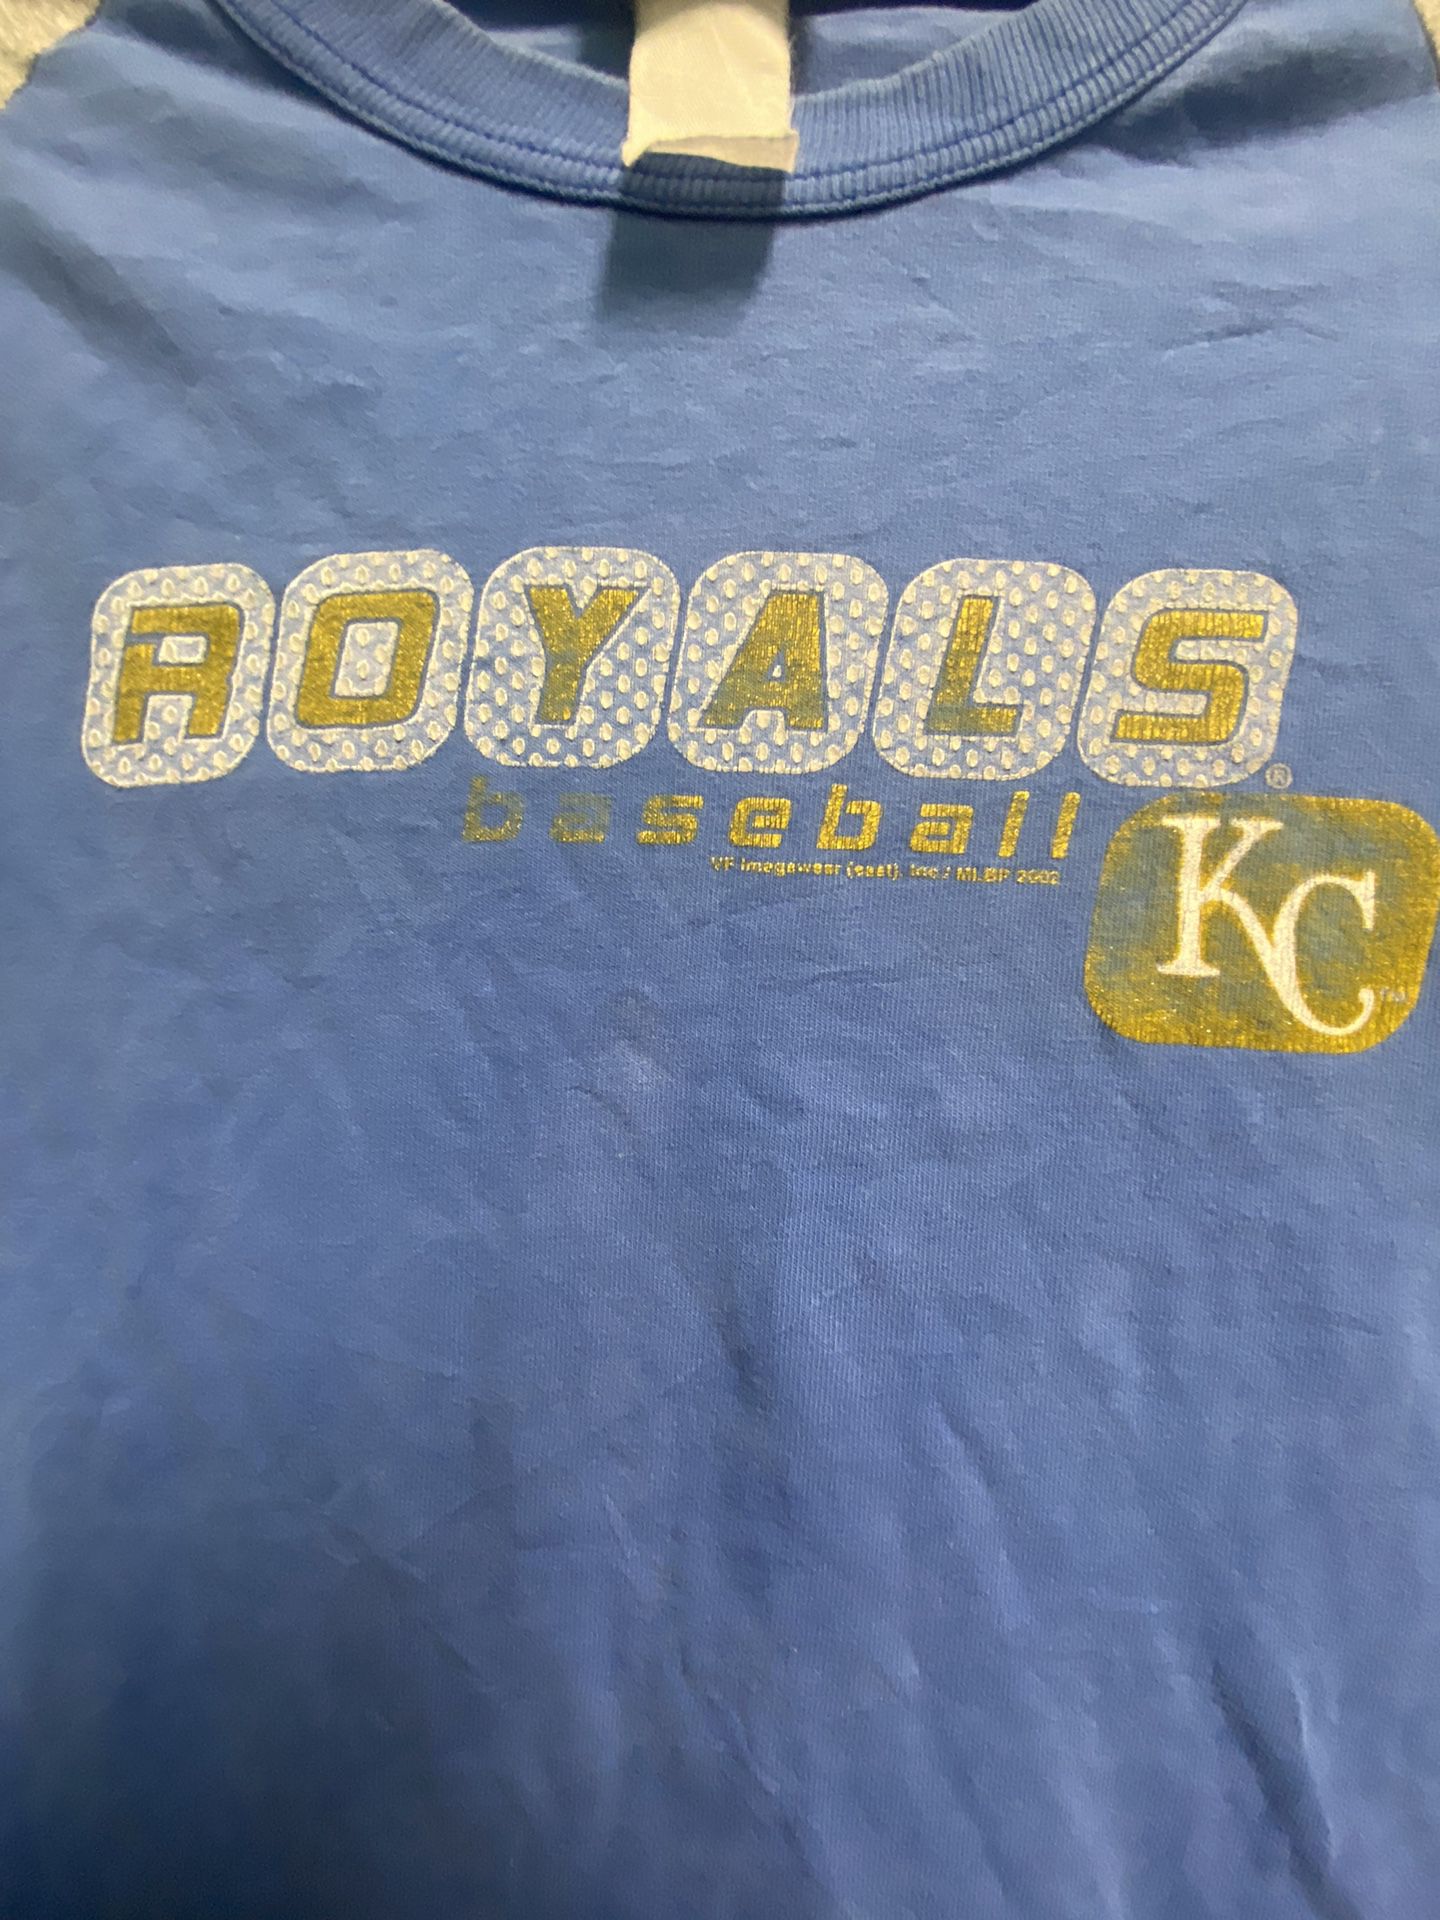 kc royals t shirt tuesday